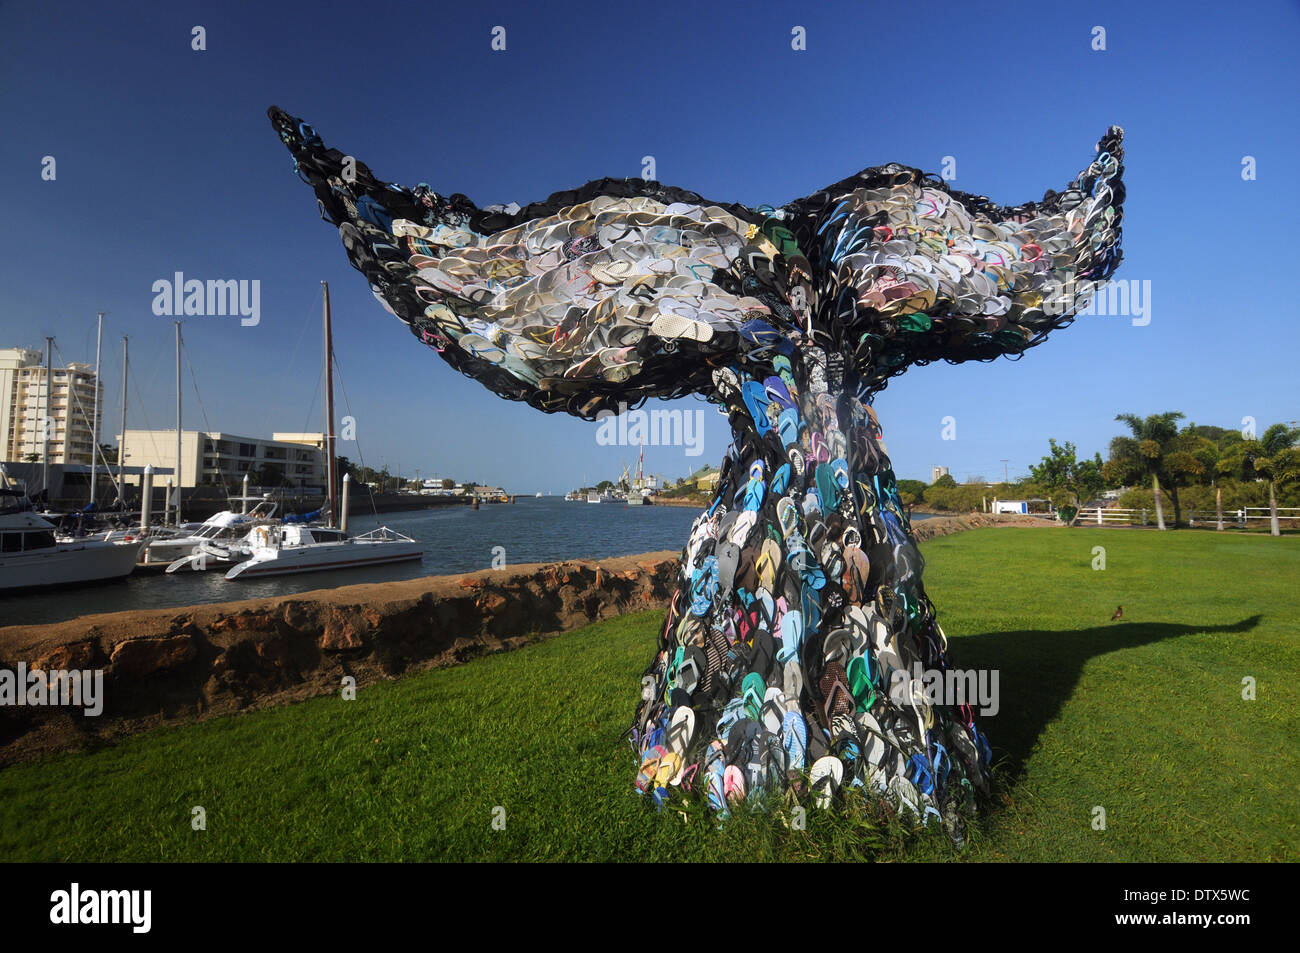 Arte da spiaggia litter - coda di balena fatta di carta riciclata per i flip-flop (tanga) dalla marina, Townsville, Queensland, Australia. N. PR Foto Stock